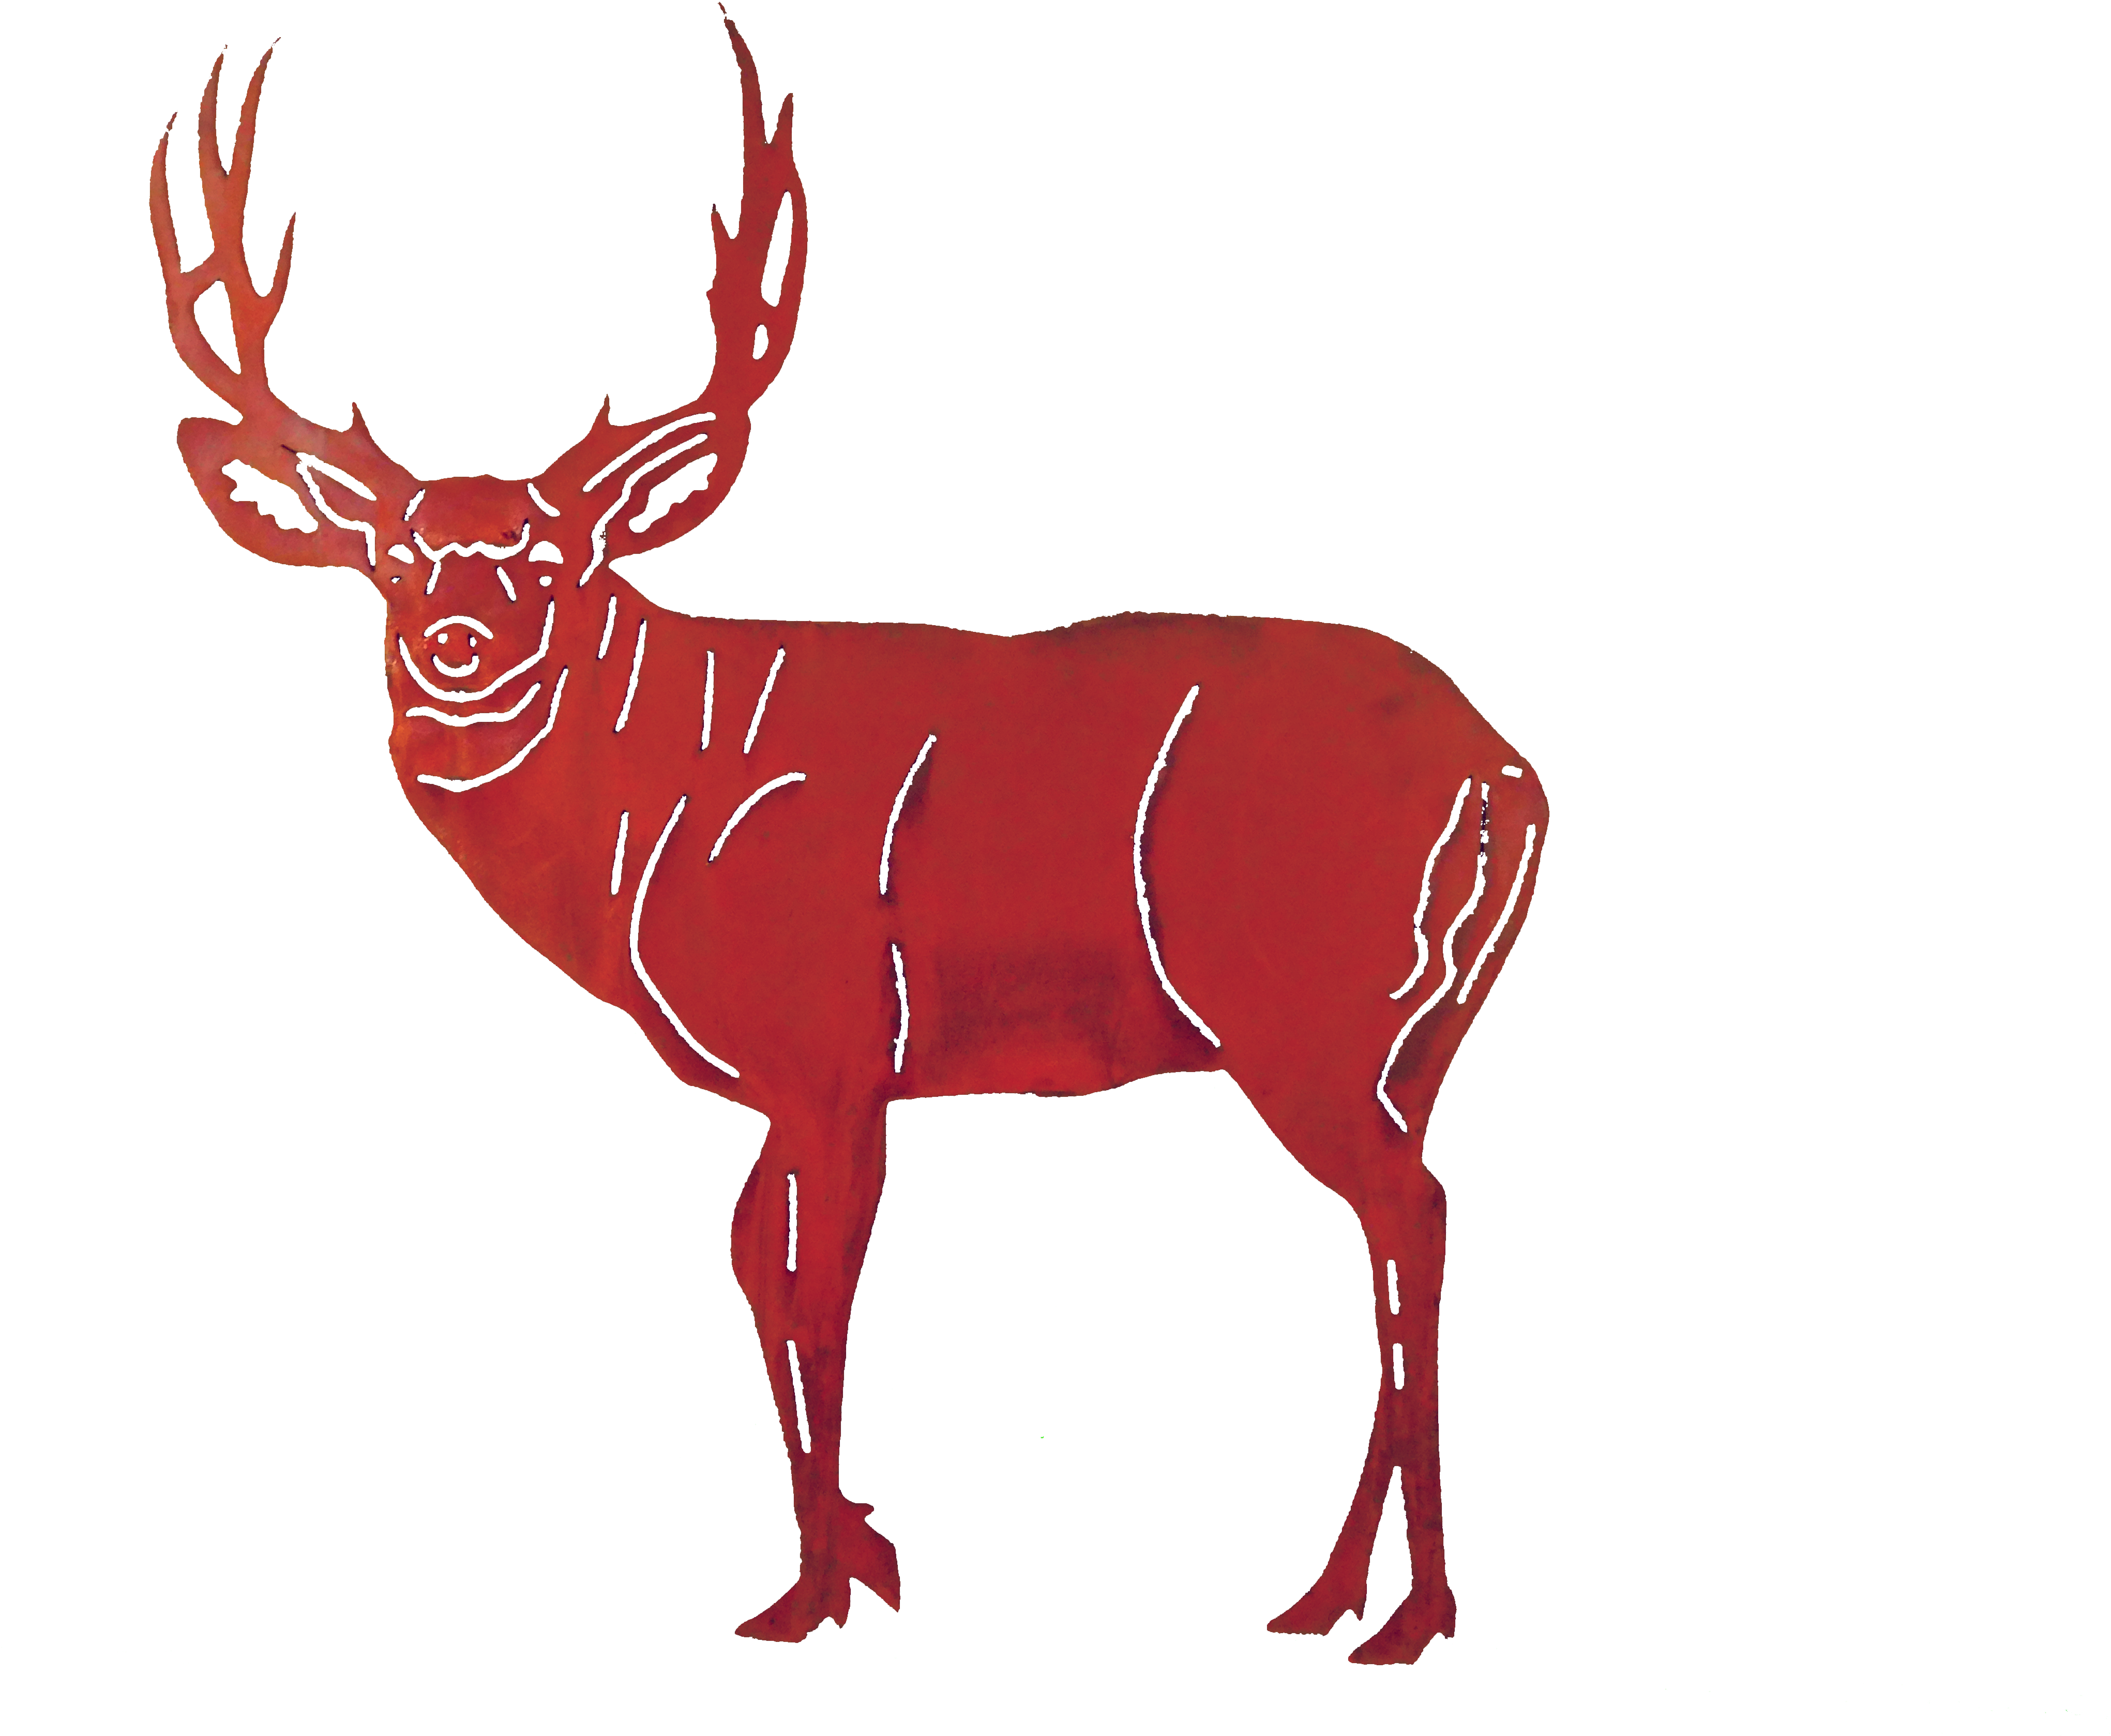 Deer-large Larger Image - Black And White Wildlife Scenes (4608x3456)